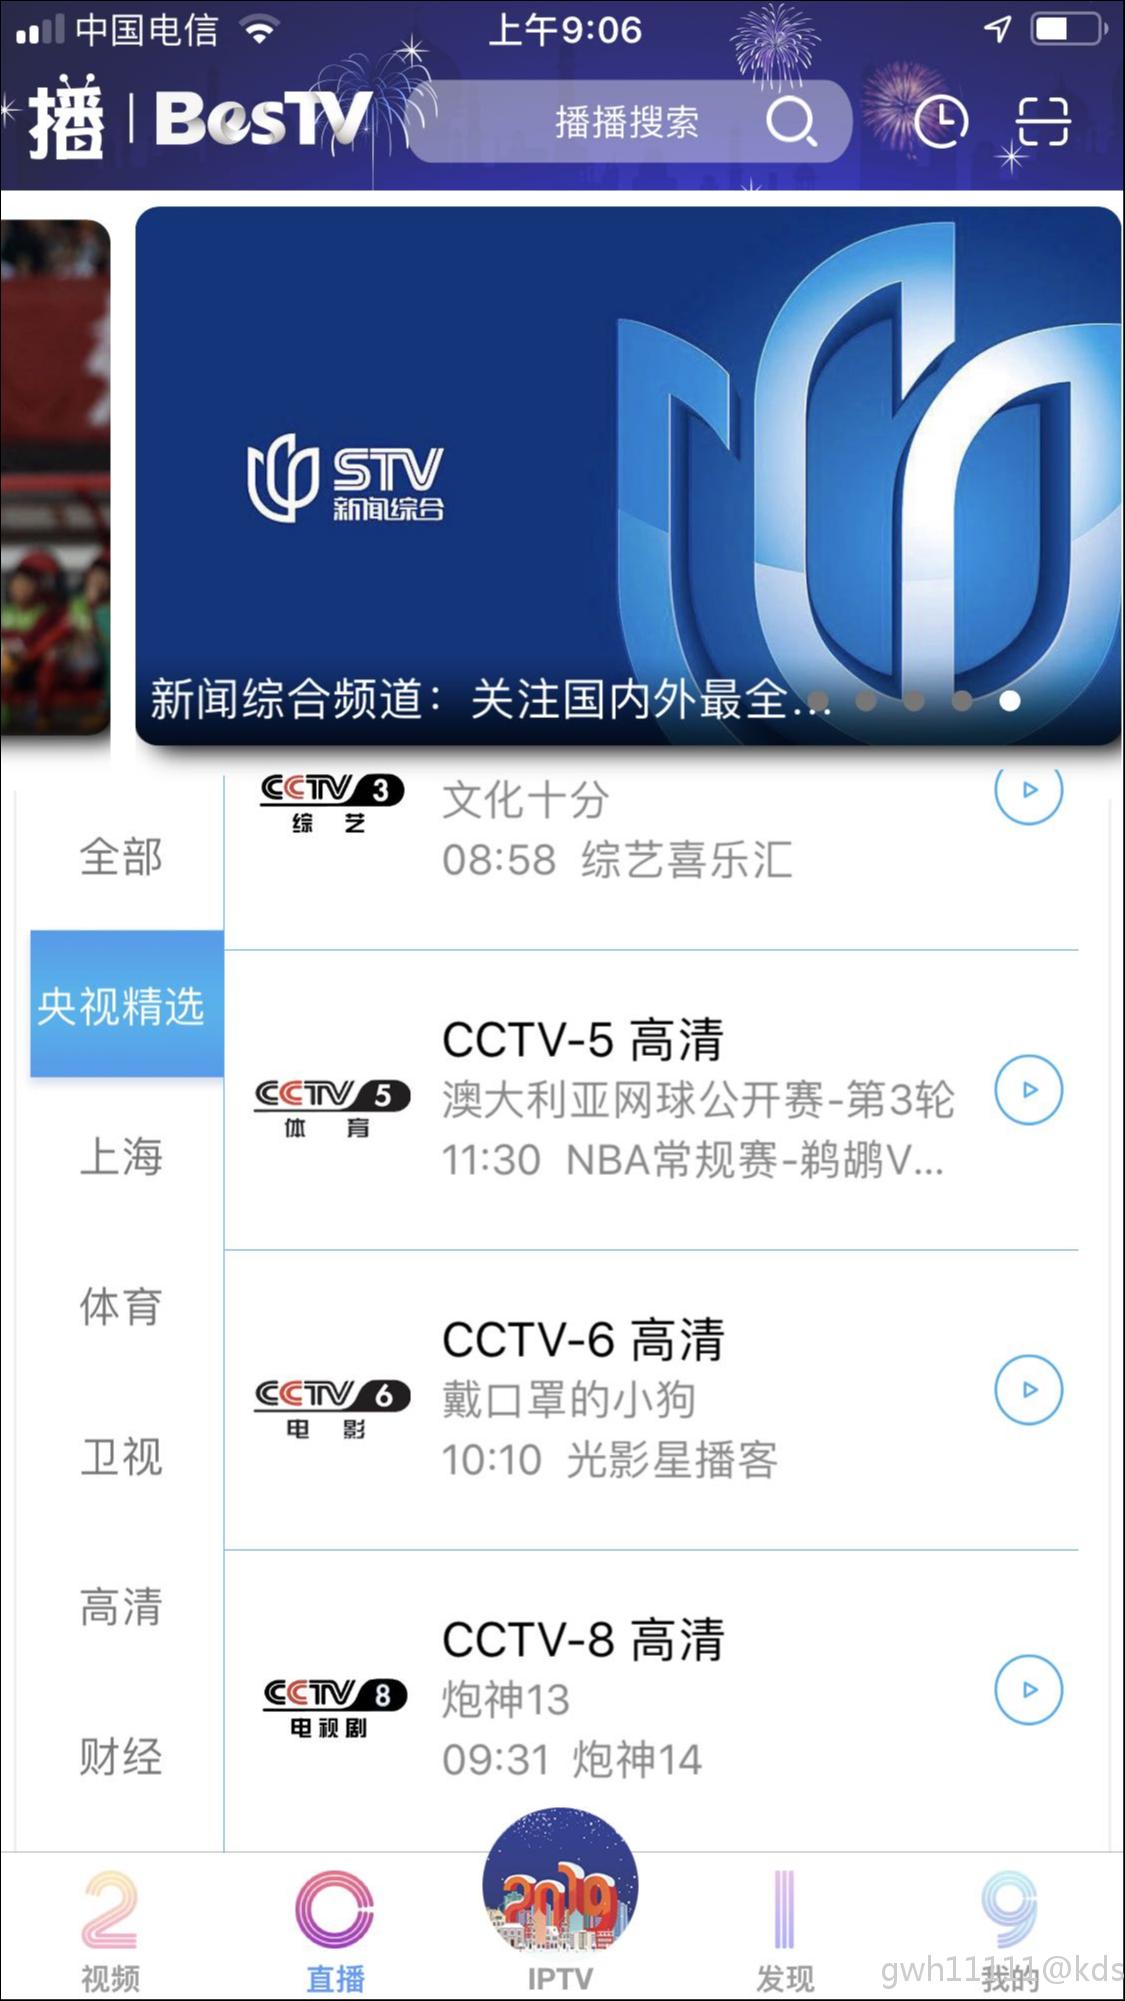 cctv5手机版客户端官方下载cntv客户端win7打开无法定位输入点-第2张图片-太平洋在线下载